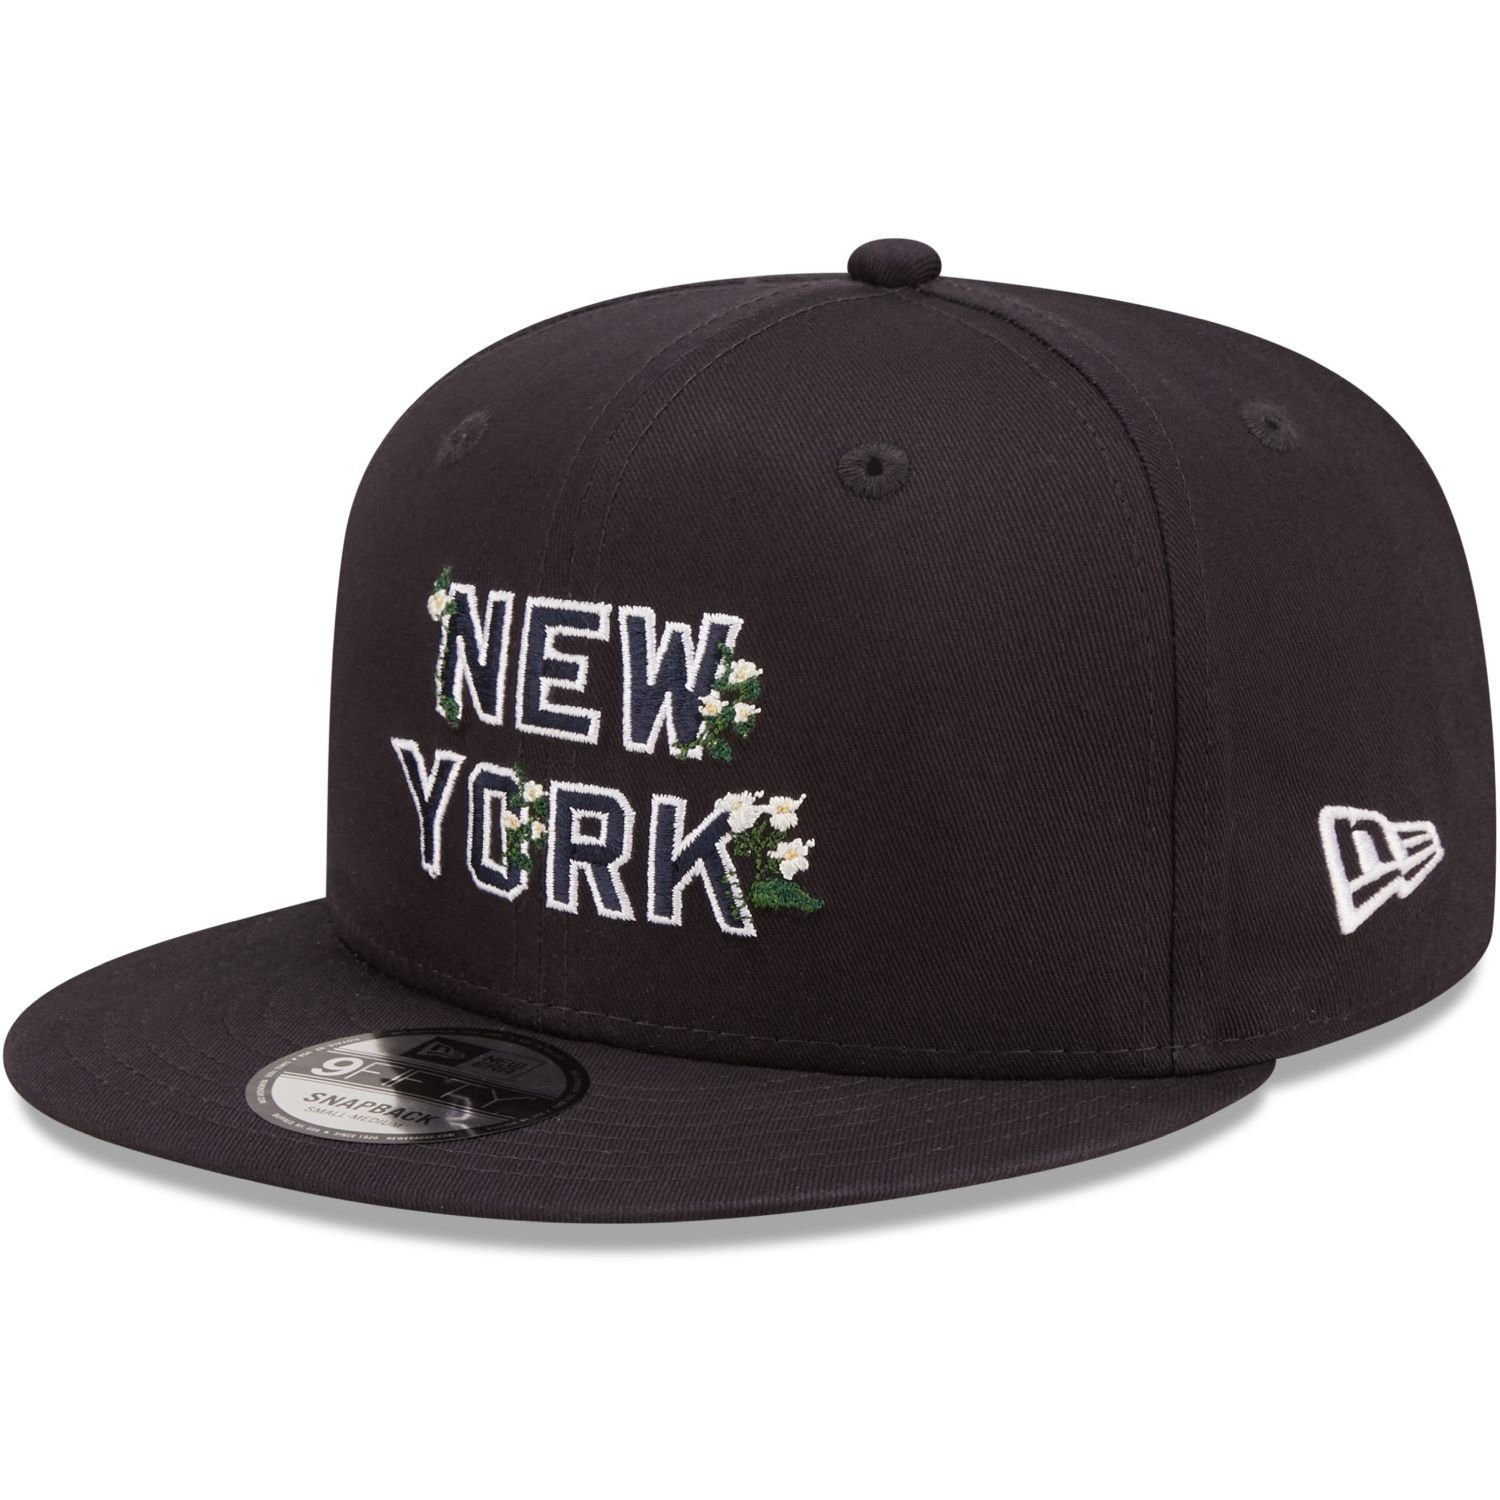 New Era York Yankees 9Fifty Snapback New Cap